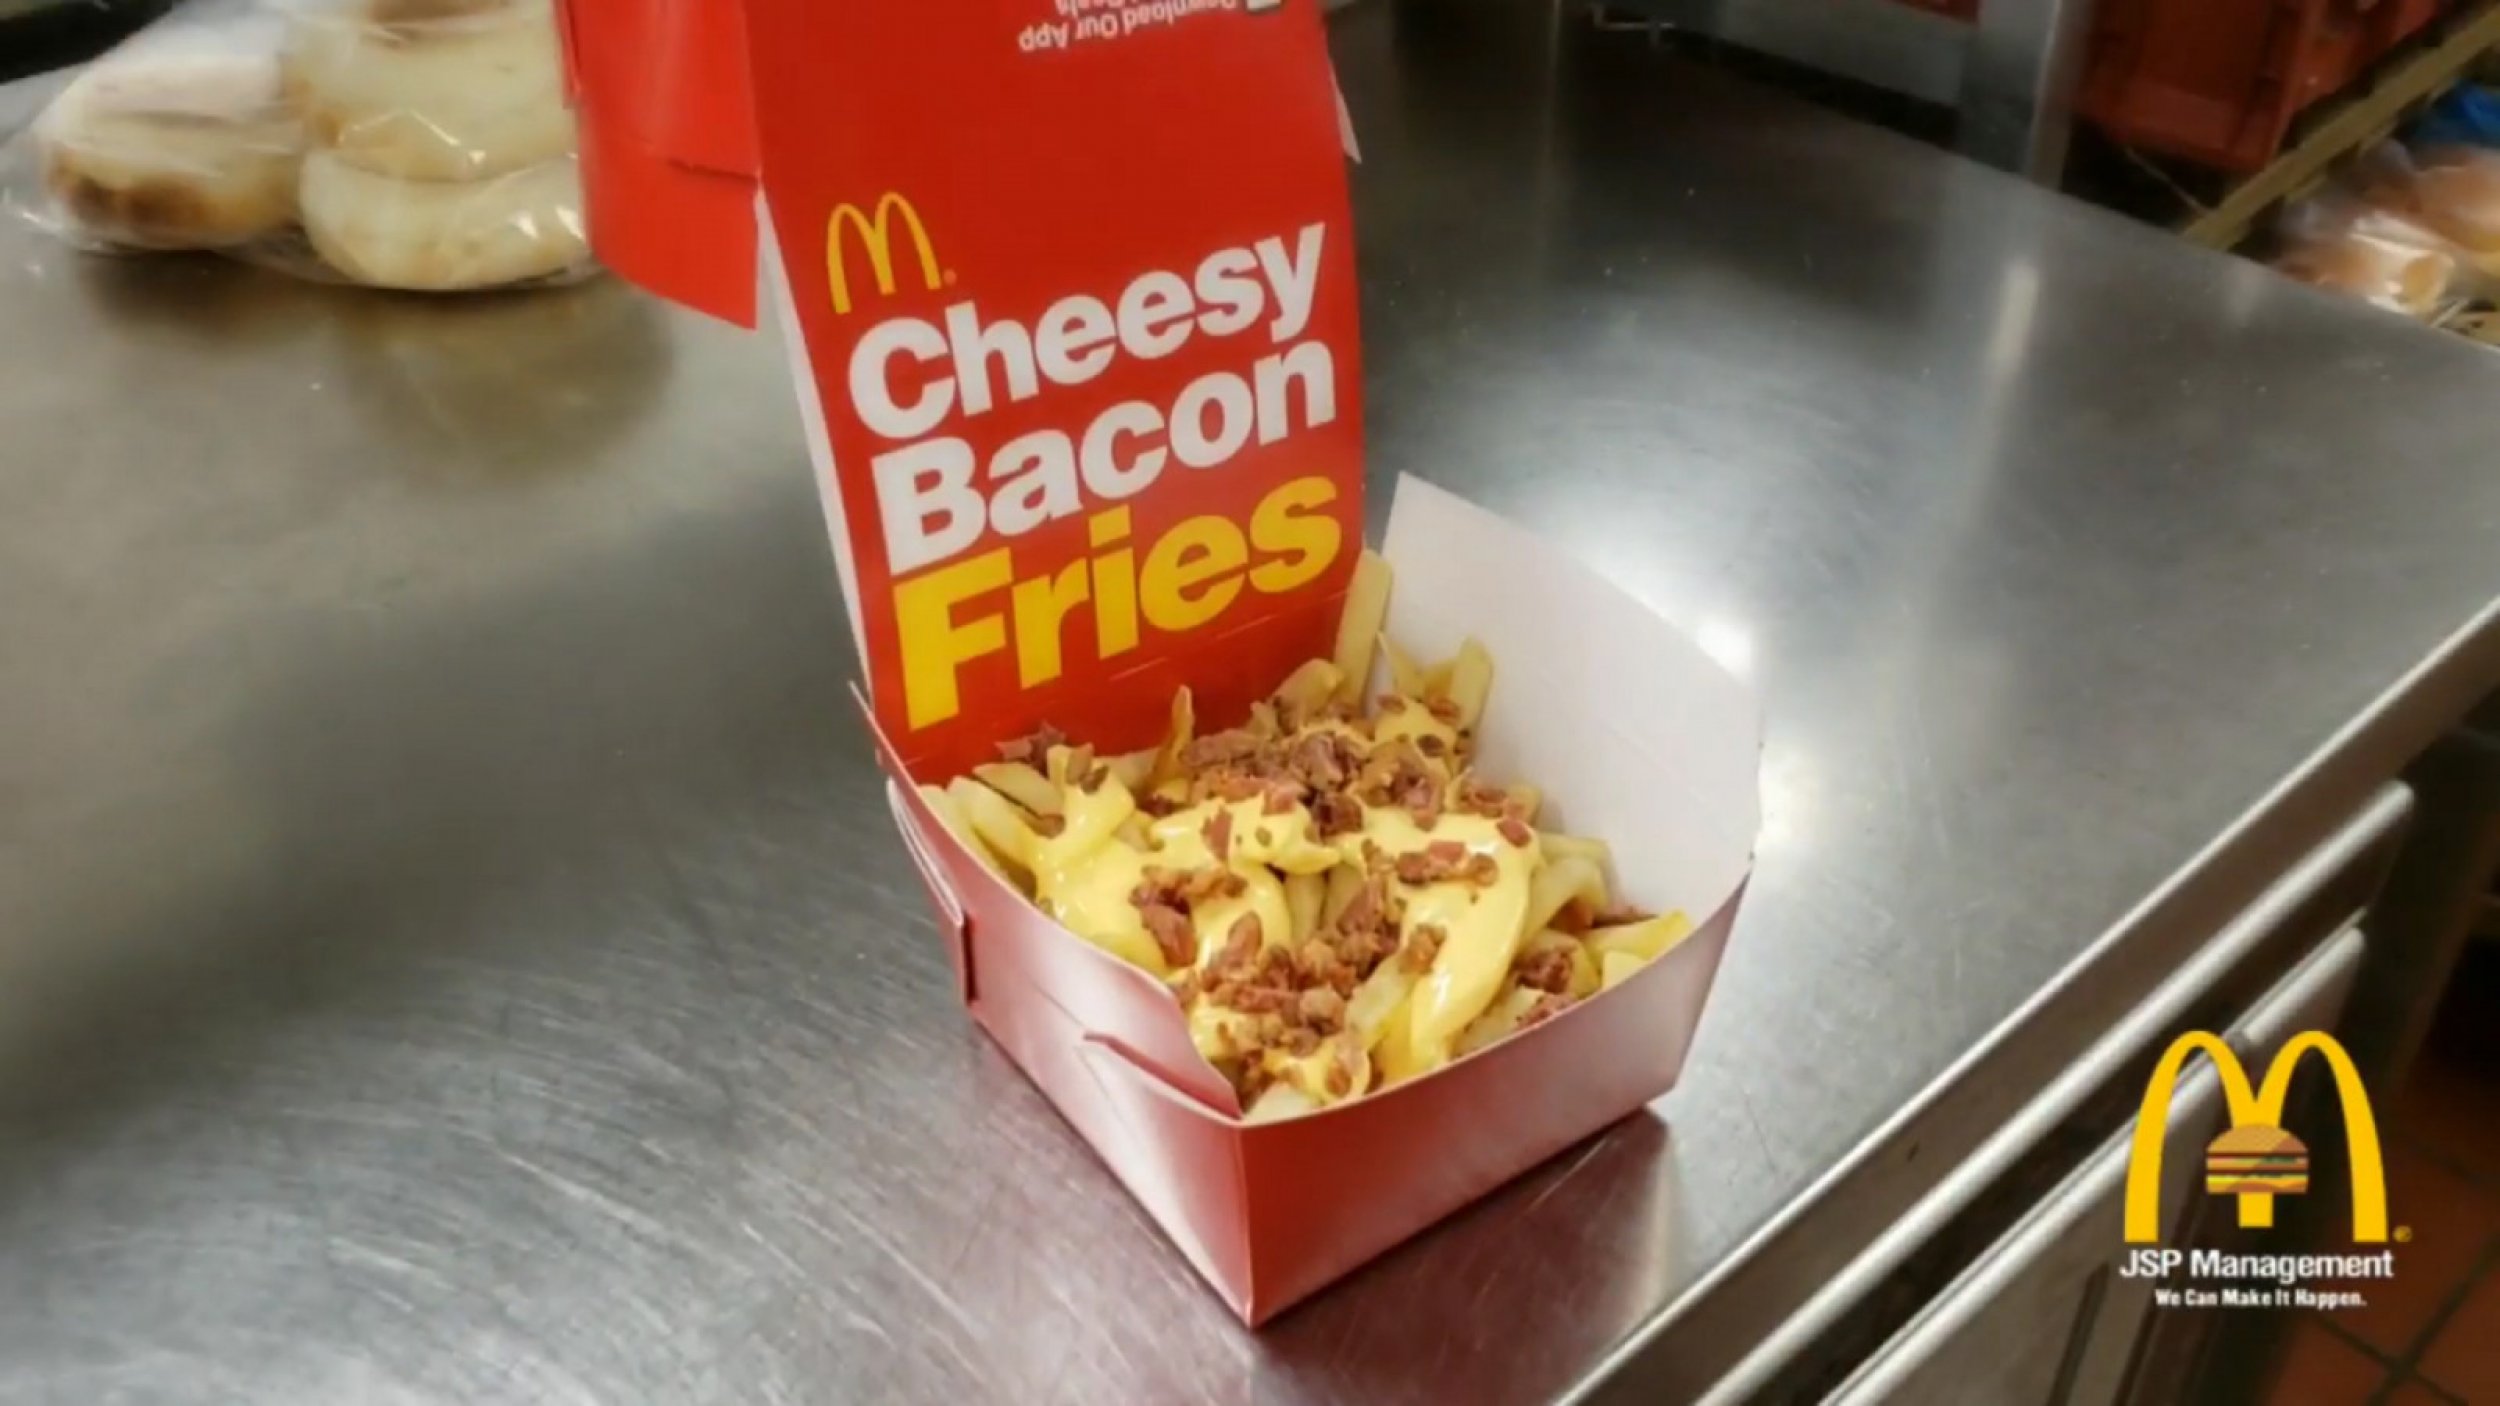 McDonalds Cheesy Bacon Fries At JSP Management